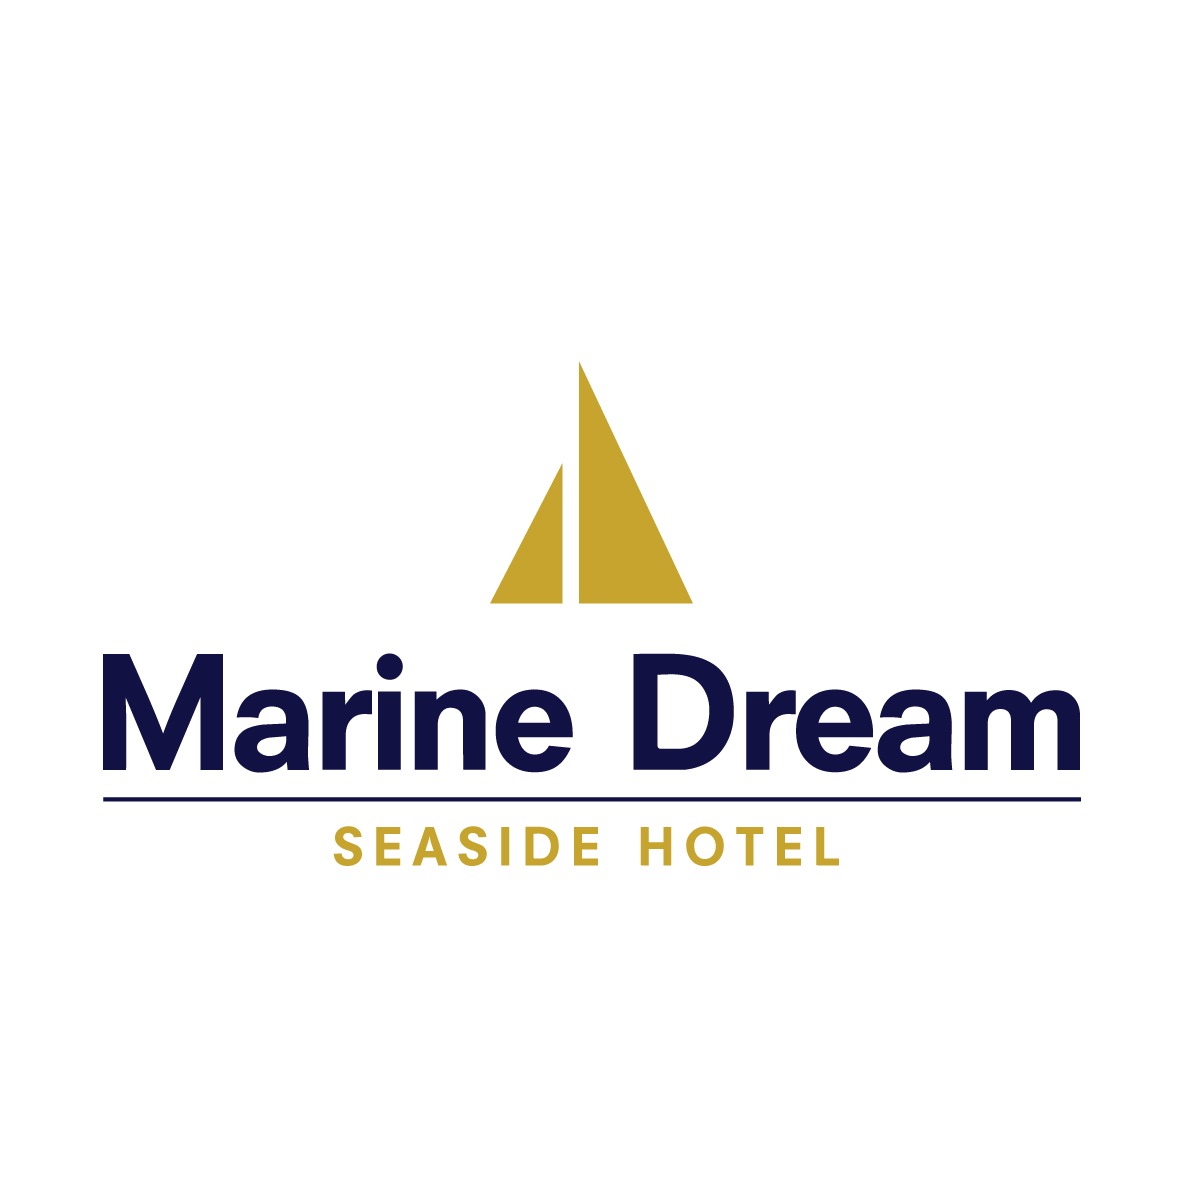 Marine Dream Seaside Hotel